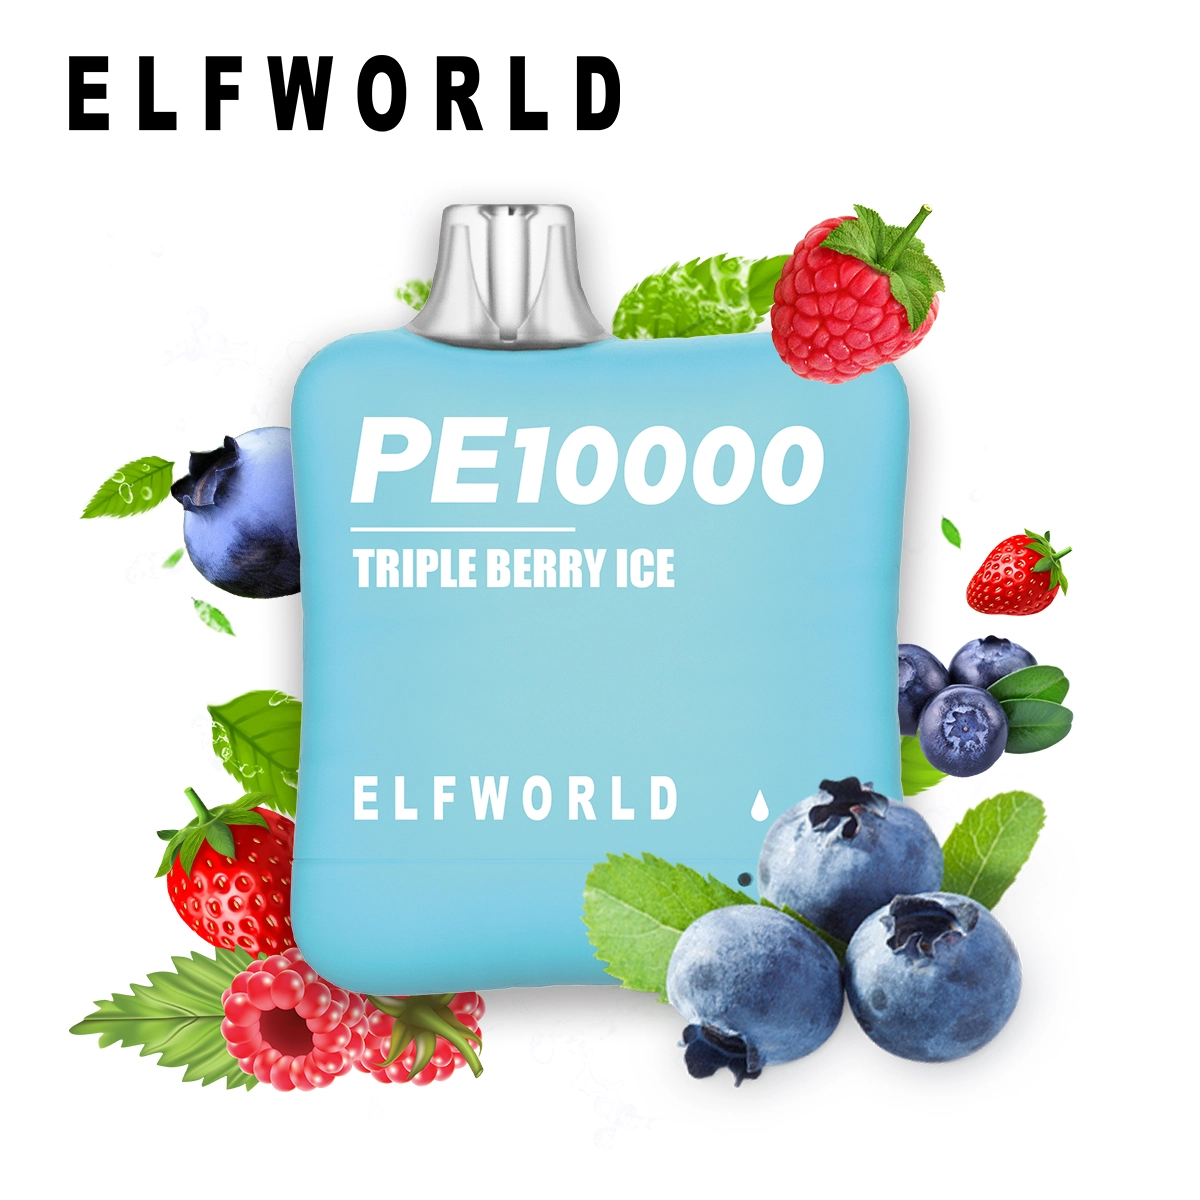 Elf World PE 10000 Triple Berry Ice